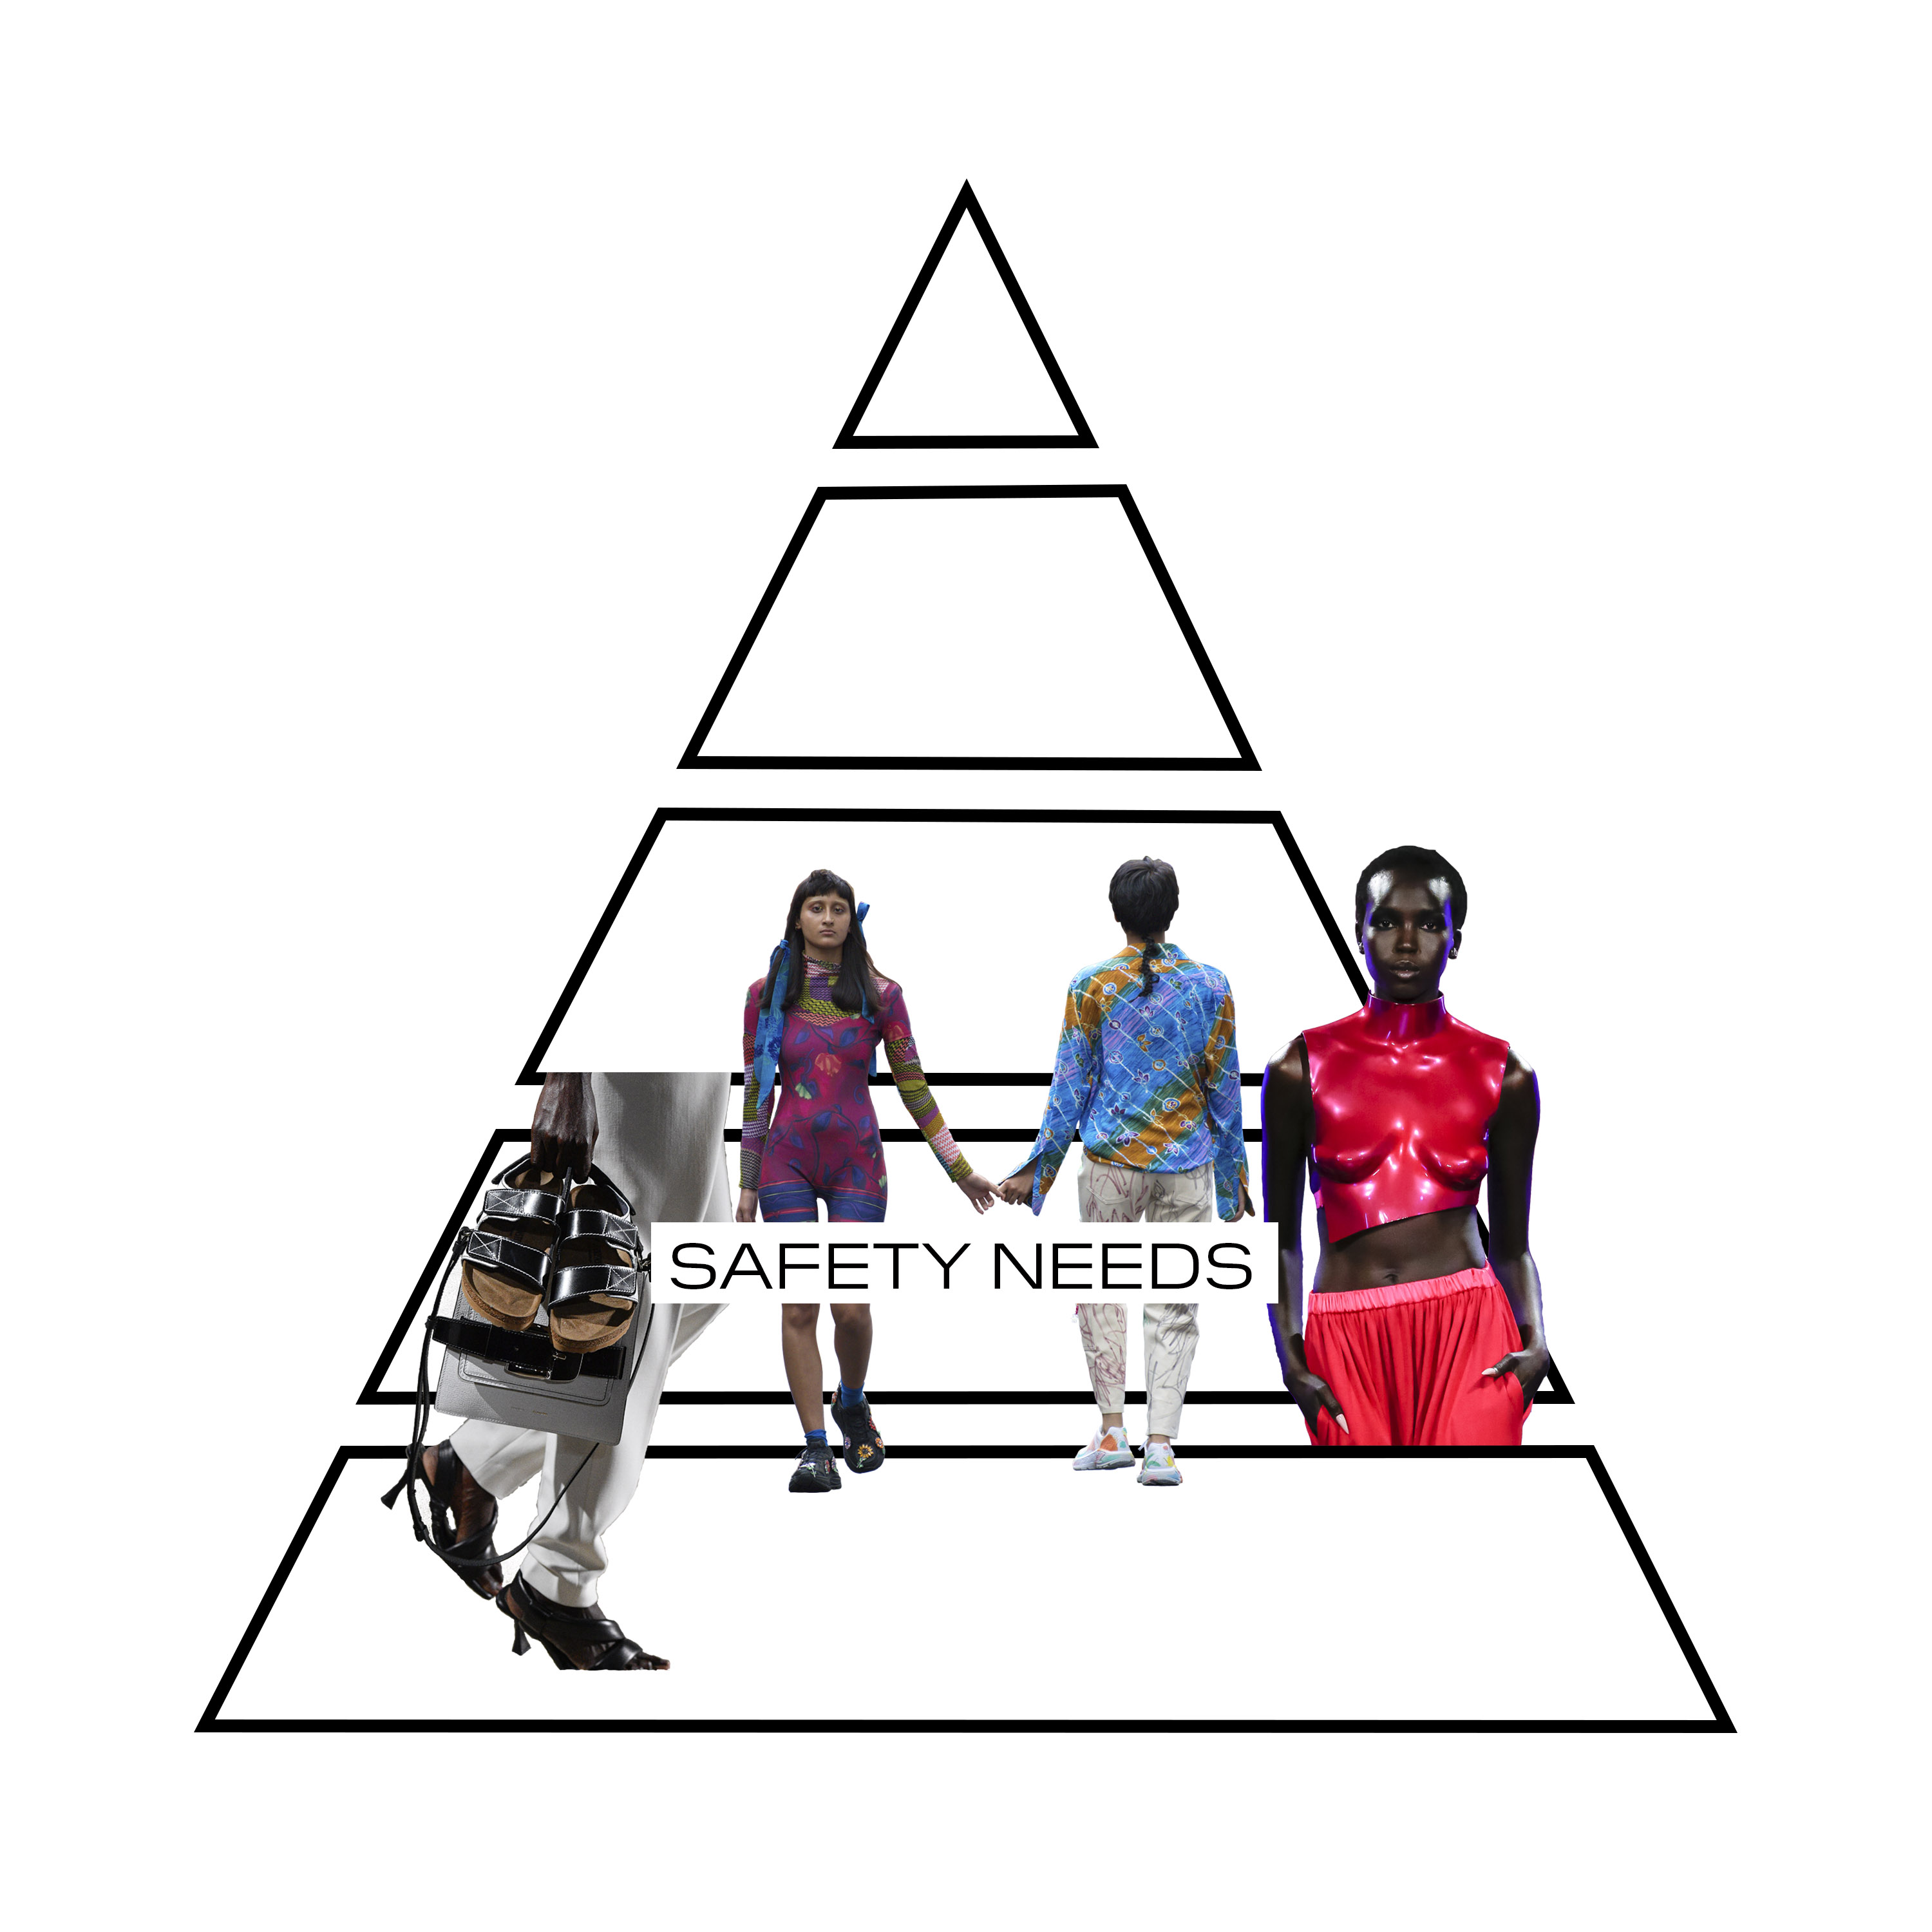 The Pyramid of Fashion Brands - Jestafreak